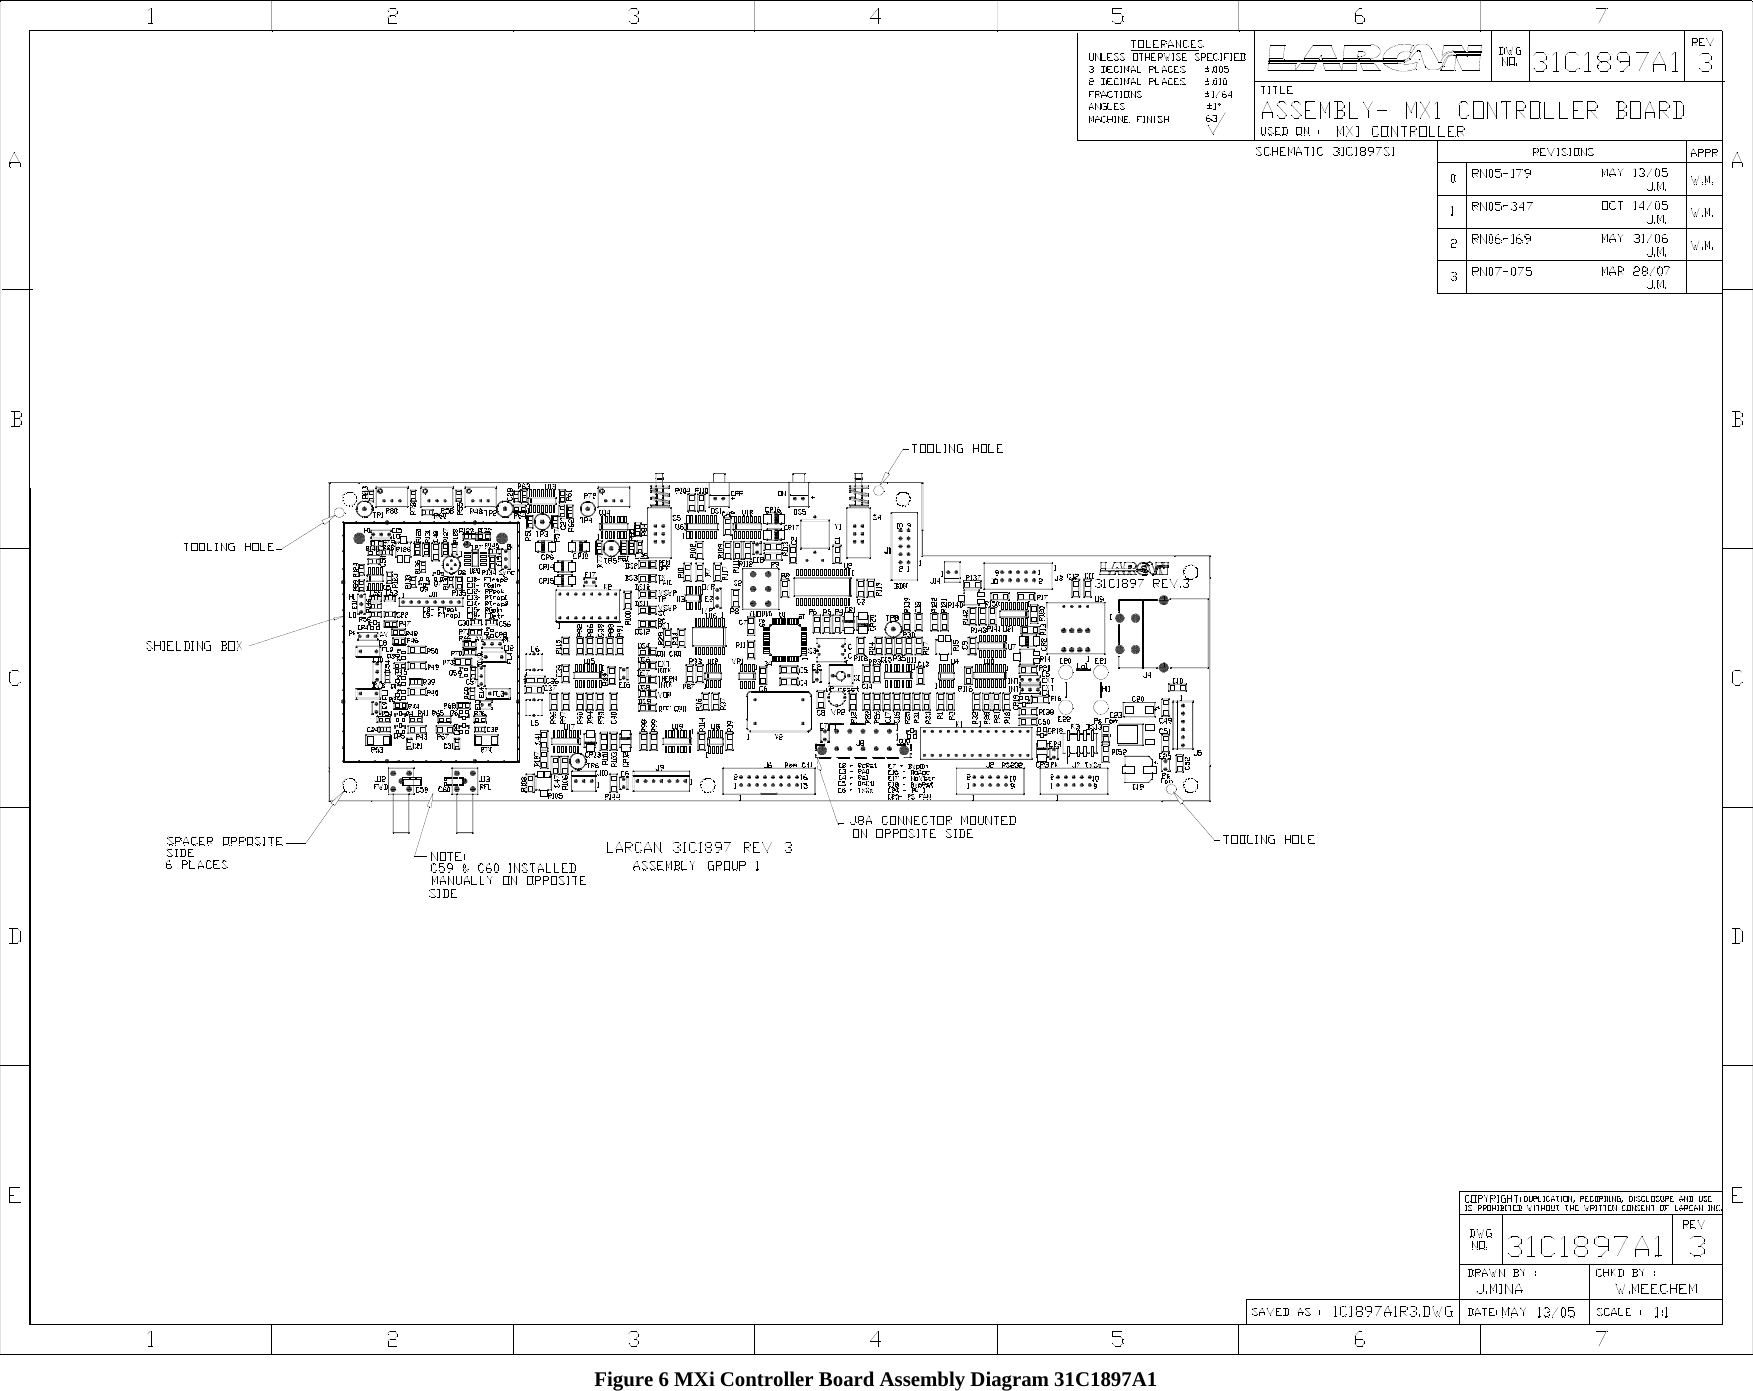   Figure 6 MXi Controller Board Assembly Diagram 31C1897A1  